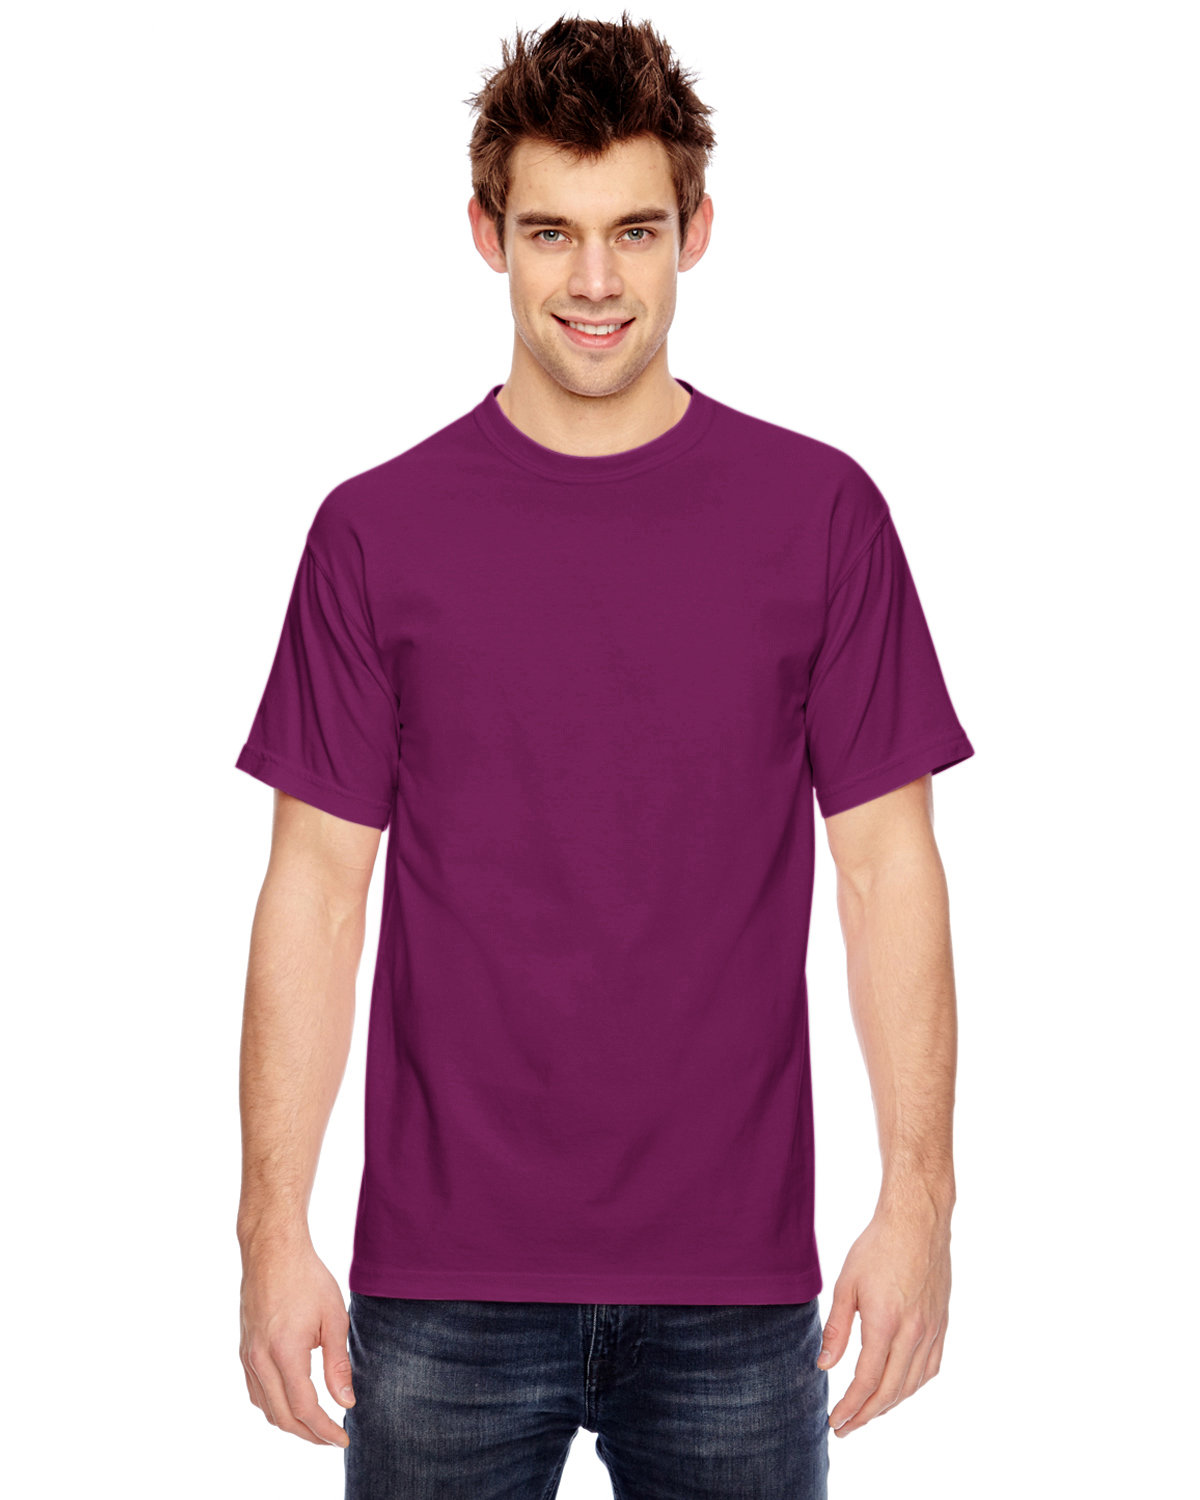 Comfort Colors Wholesale T-Shirts & Hoodies 